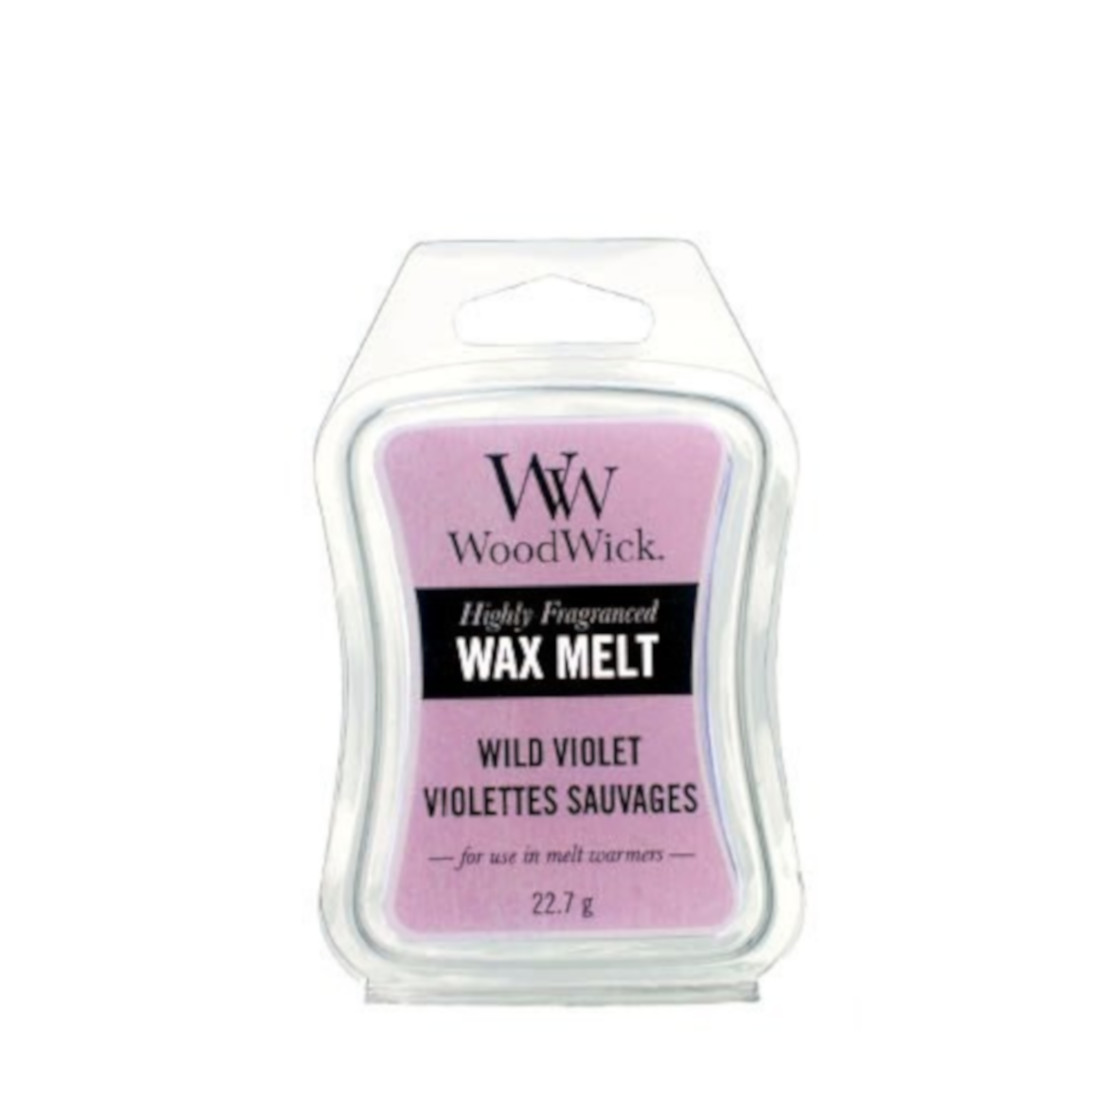 Woodwick Wild Violet Wax Melt